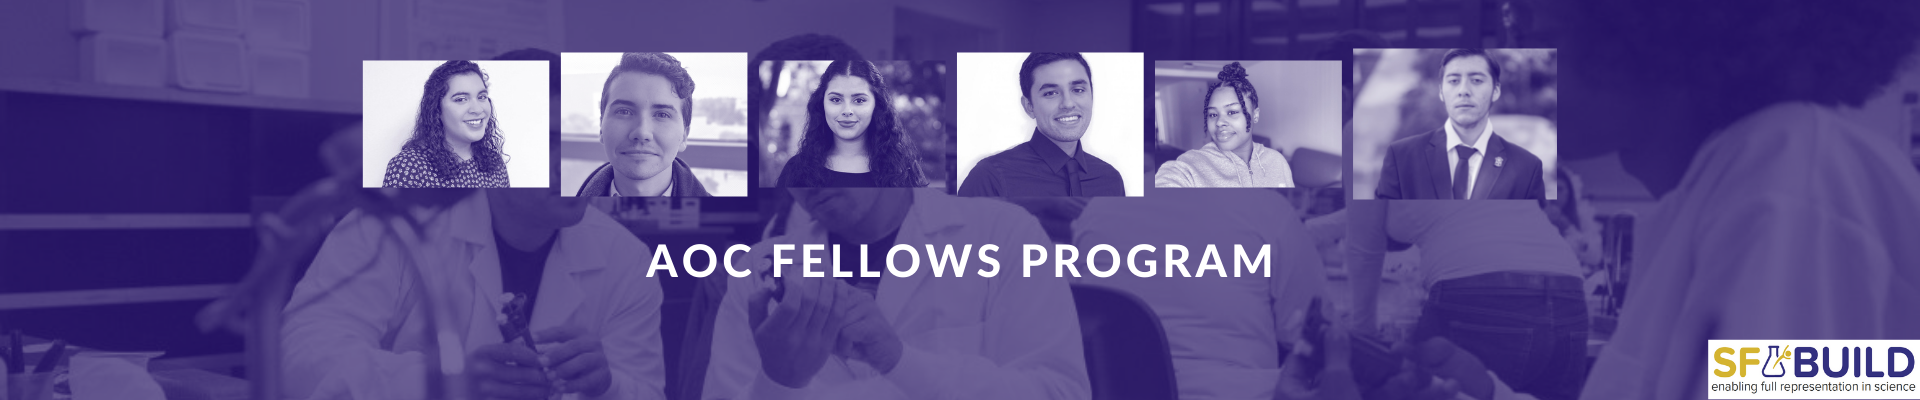 AOC Fellows Program featuring SF BUILD scholars